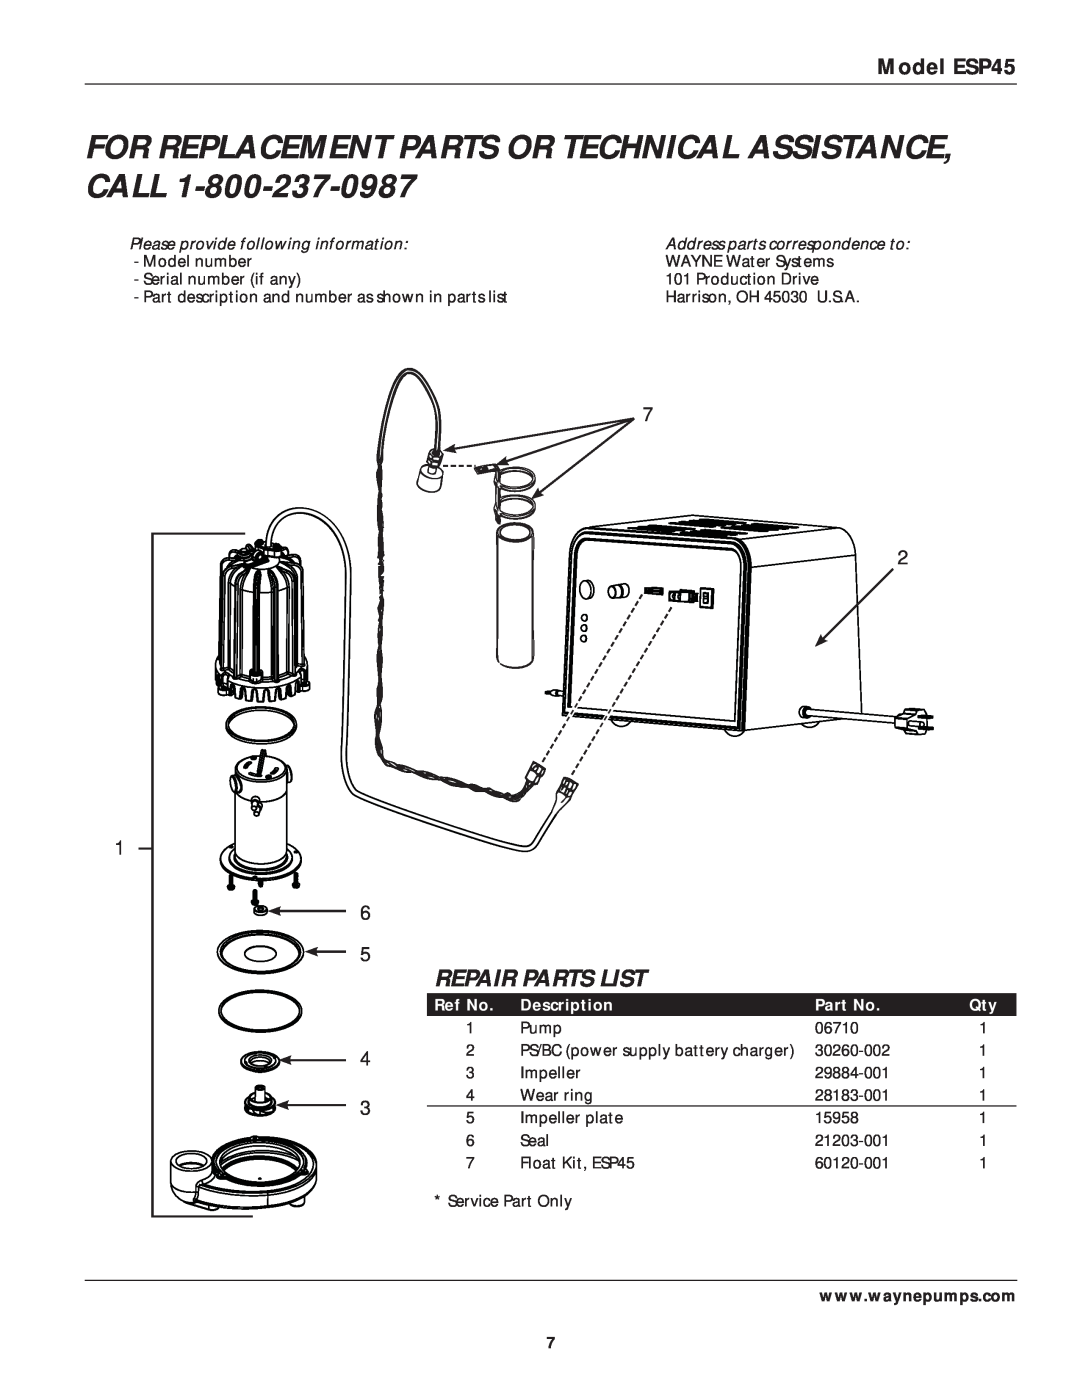 Wayne specifications Ref No, Description, Repair Parts List, Model ESP45 